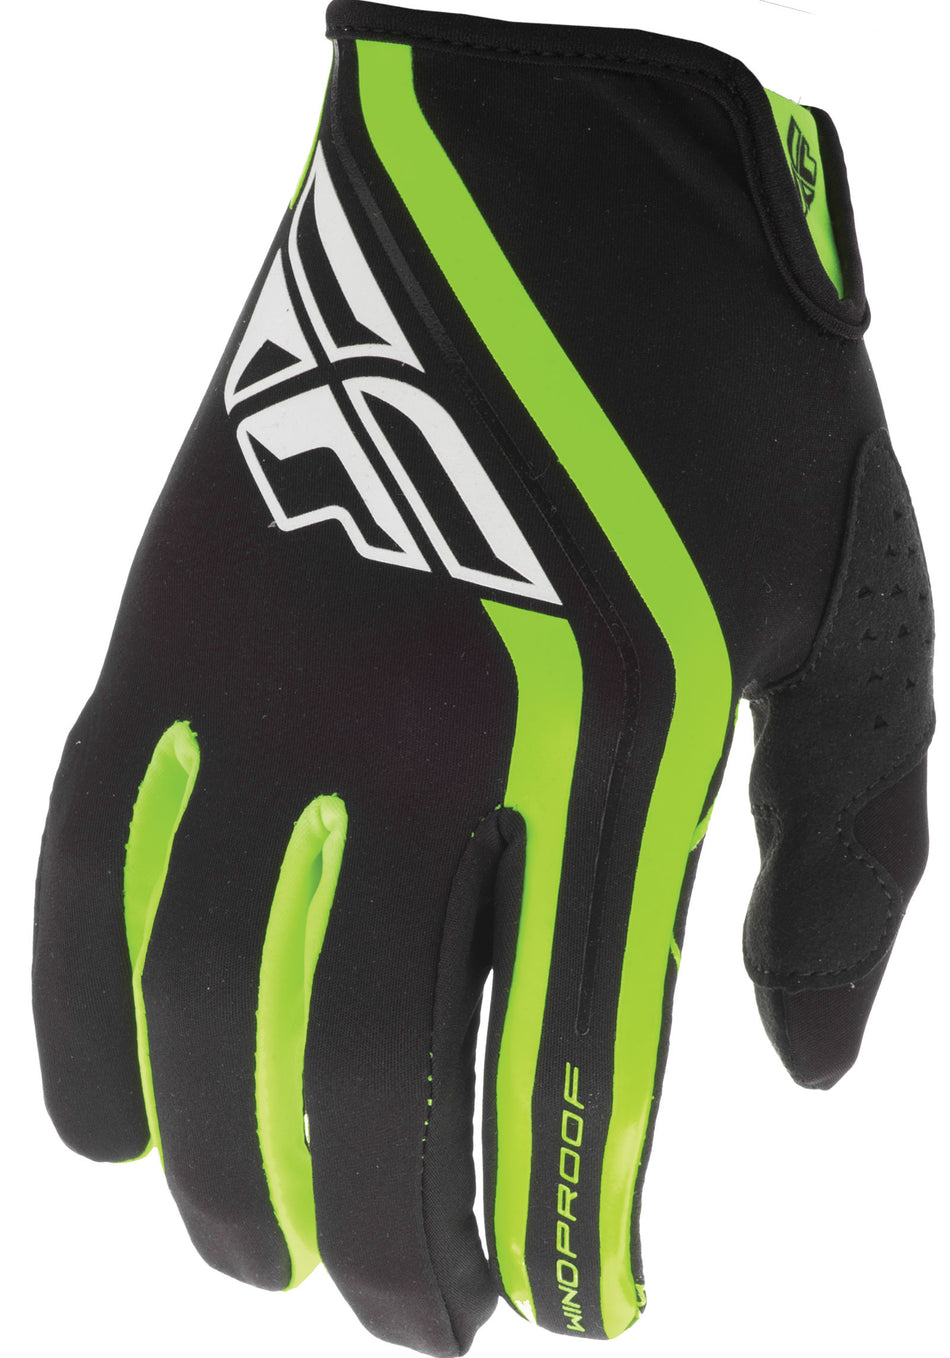 FLY RACING Windproof Gloves Black/Hi-Vis Sz 13 371-14913